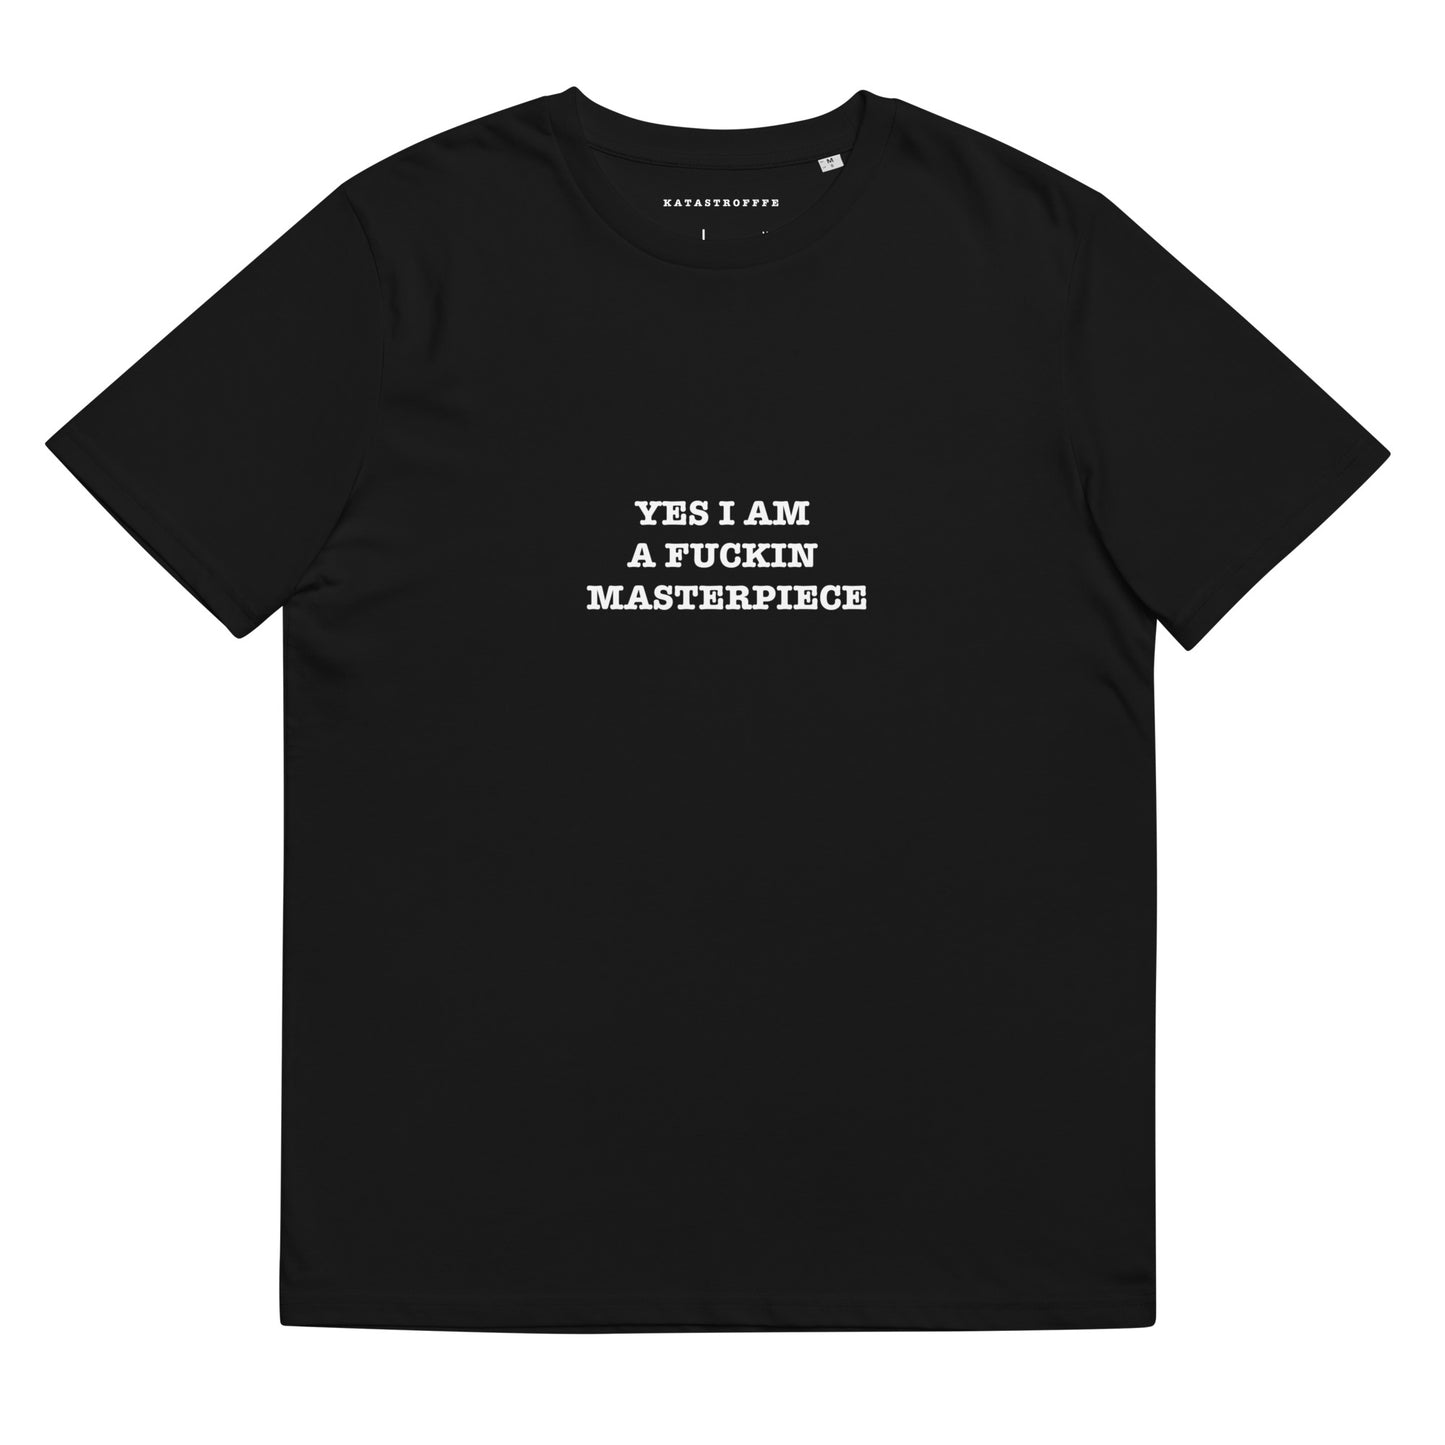 YES I AM FUKIN MASTERPIECE Black Katastrofffe Unisex organic cotton t-shirt